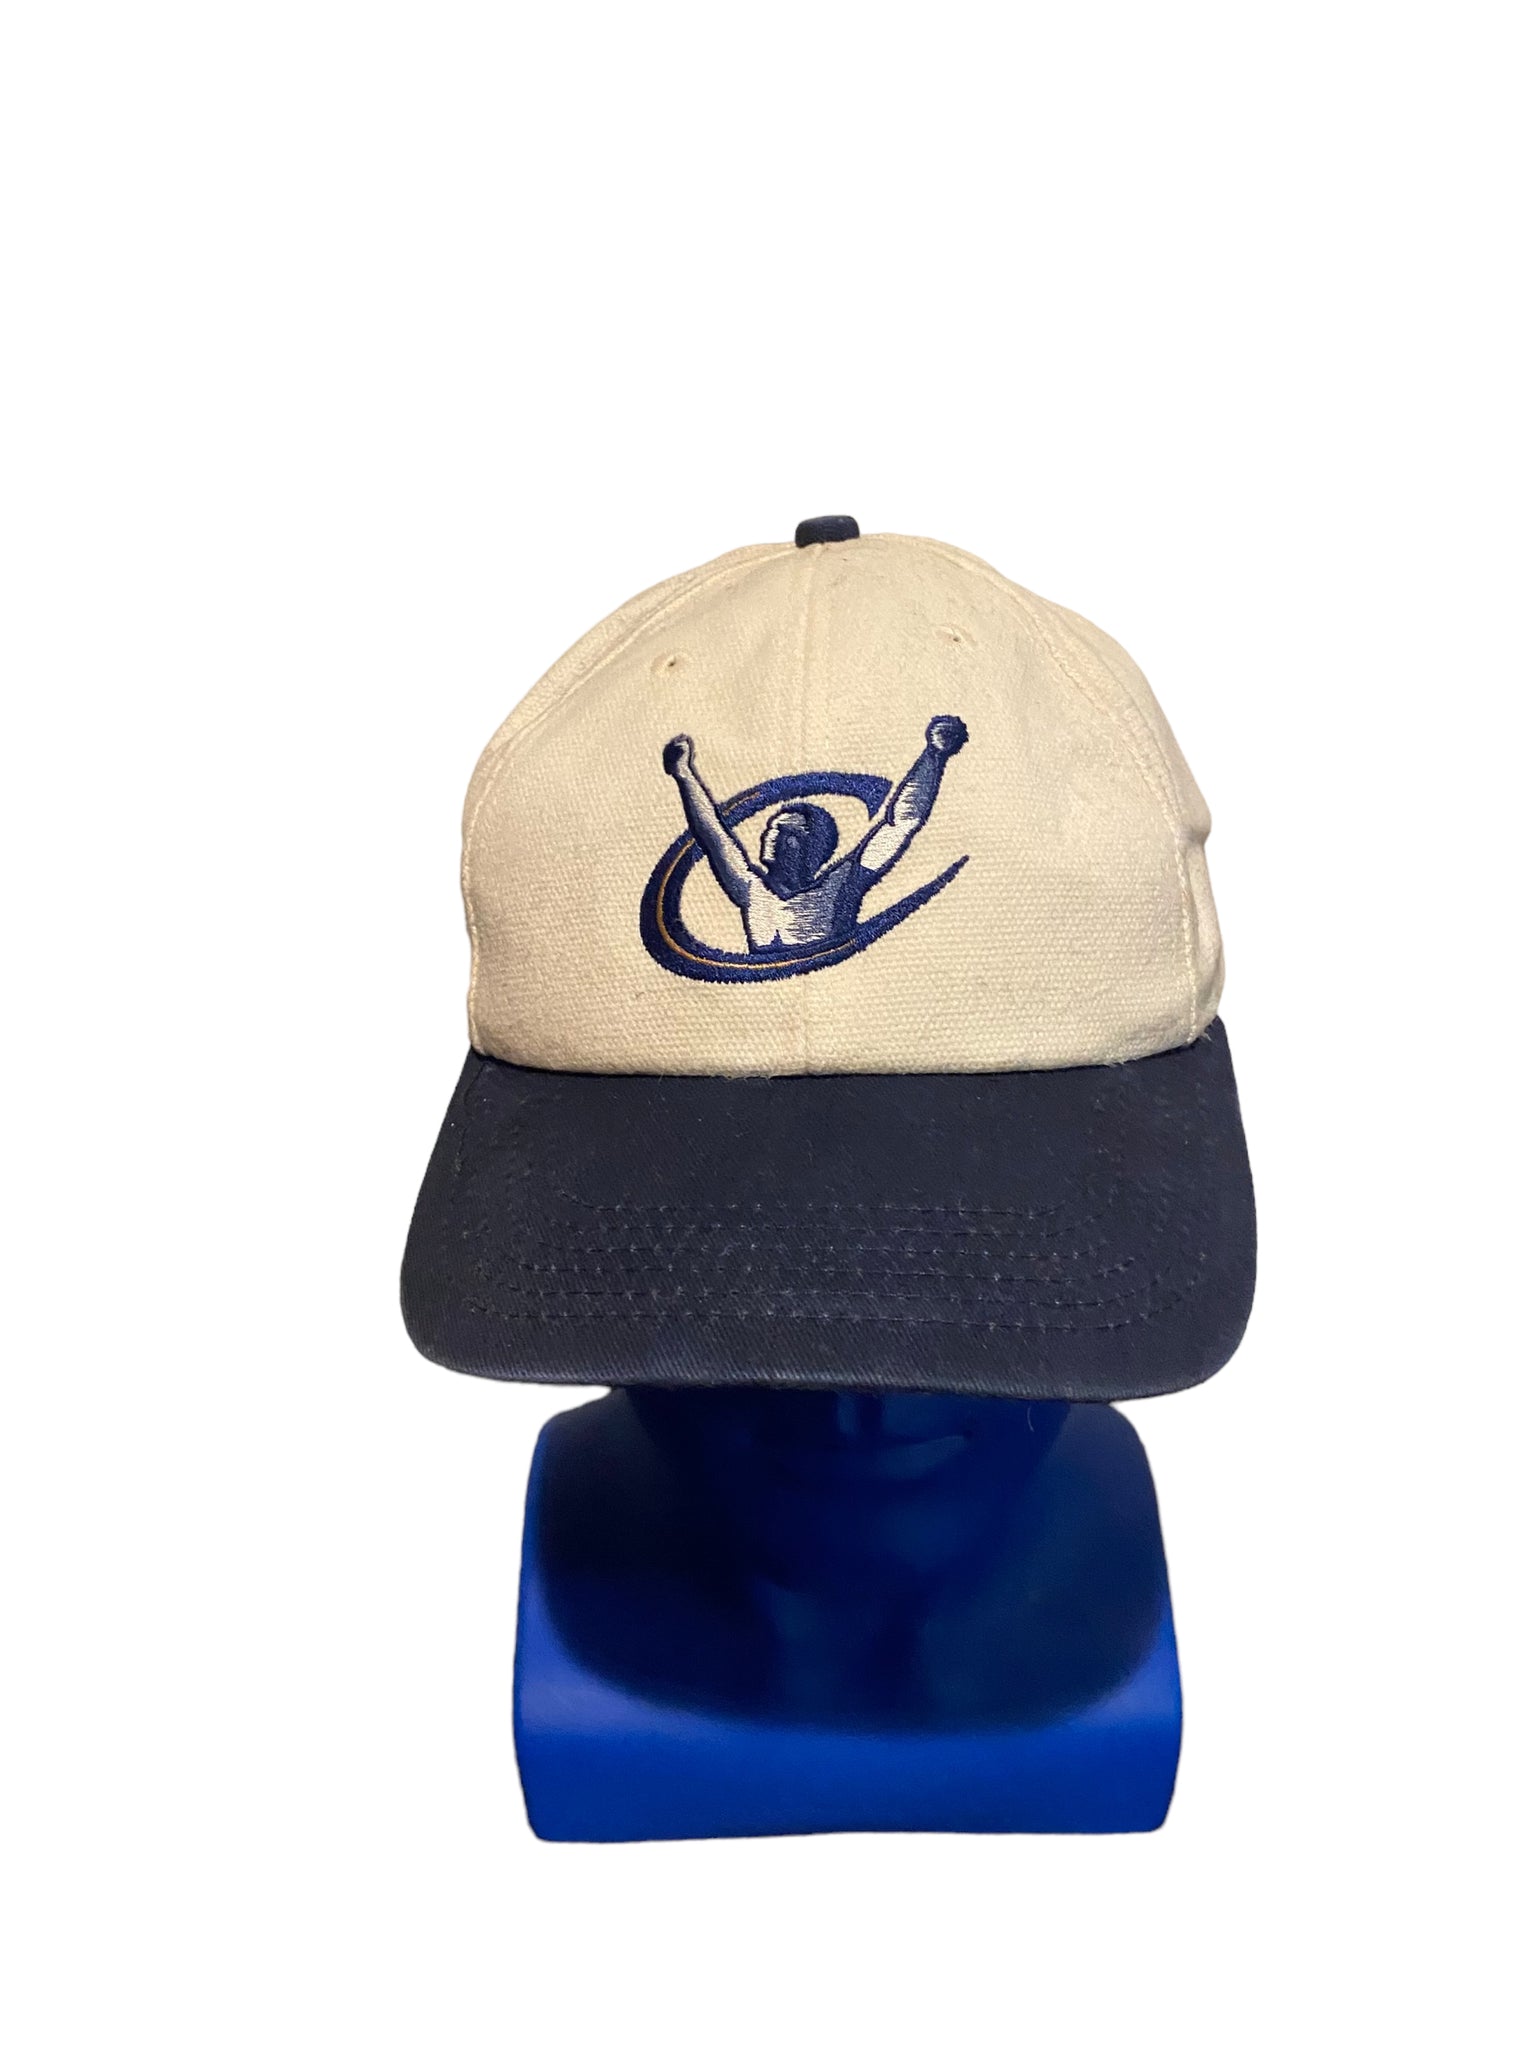 vintage k products espn classic snapback hat